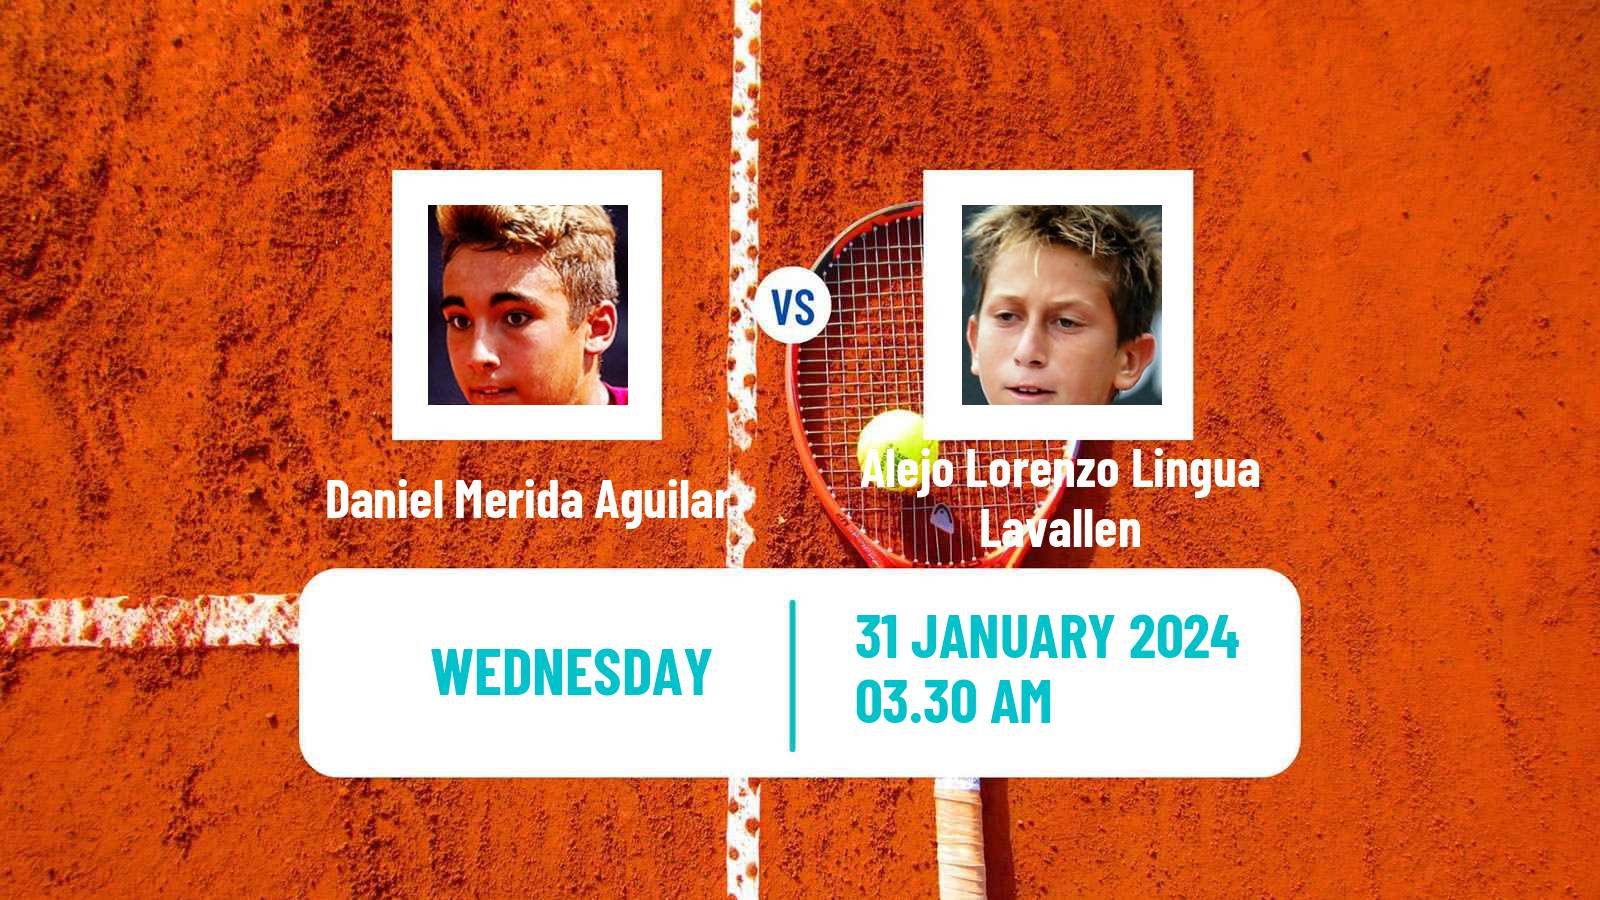 Tennis ITF M25 Antalya Men Daniel Merida Aguilar - Alejo Lorenzo Lingua Lavallen